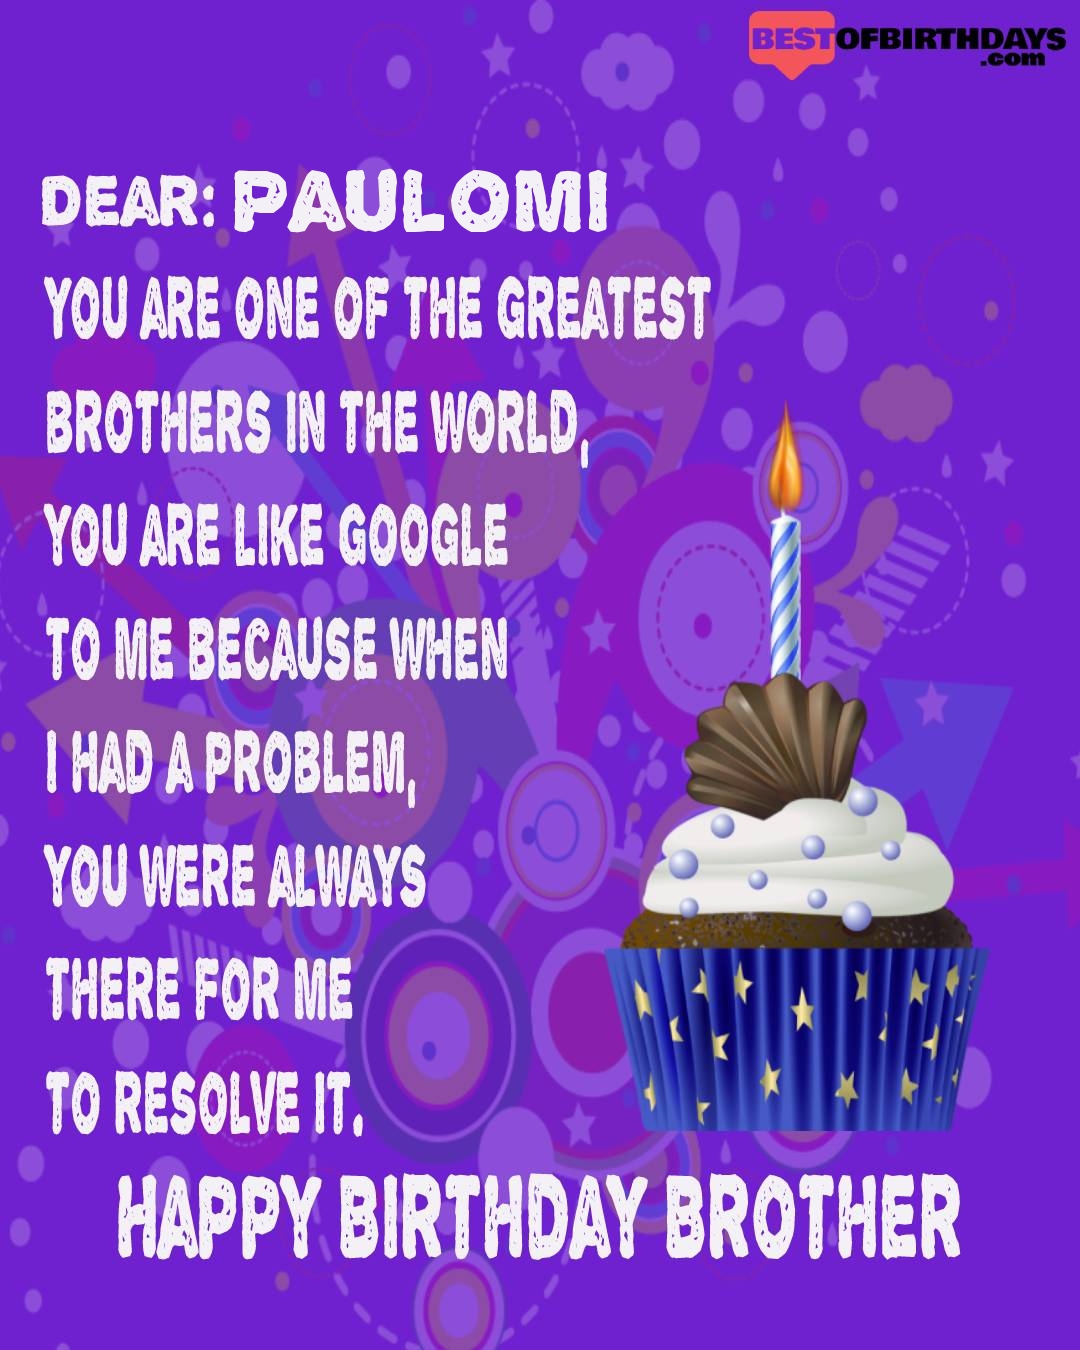 Happy birthday paulomi bhai brother bro